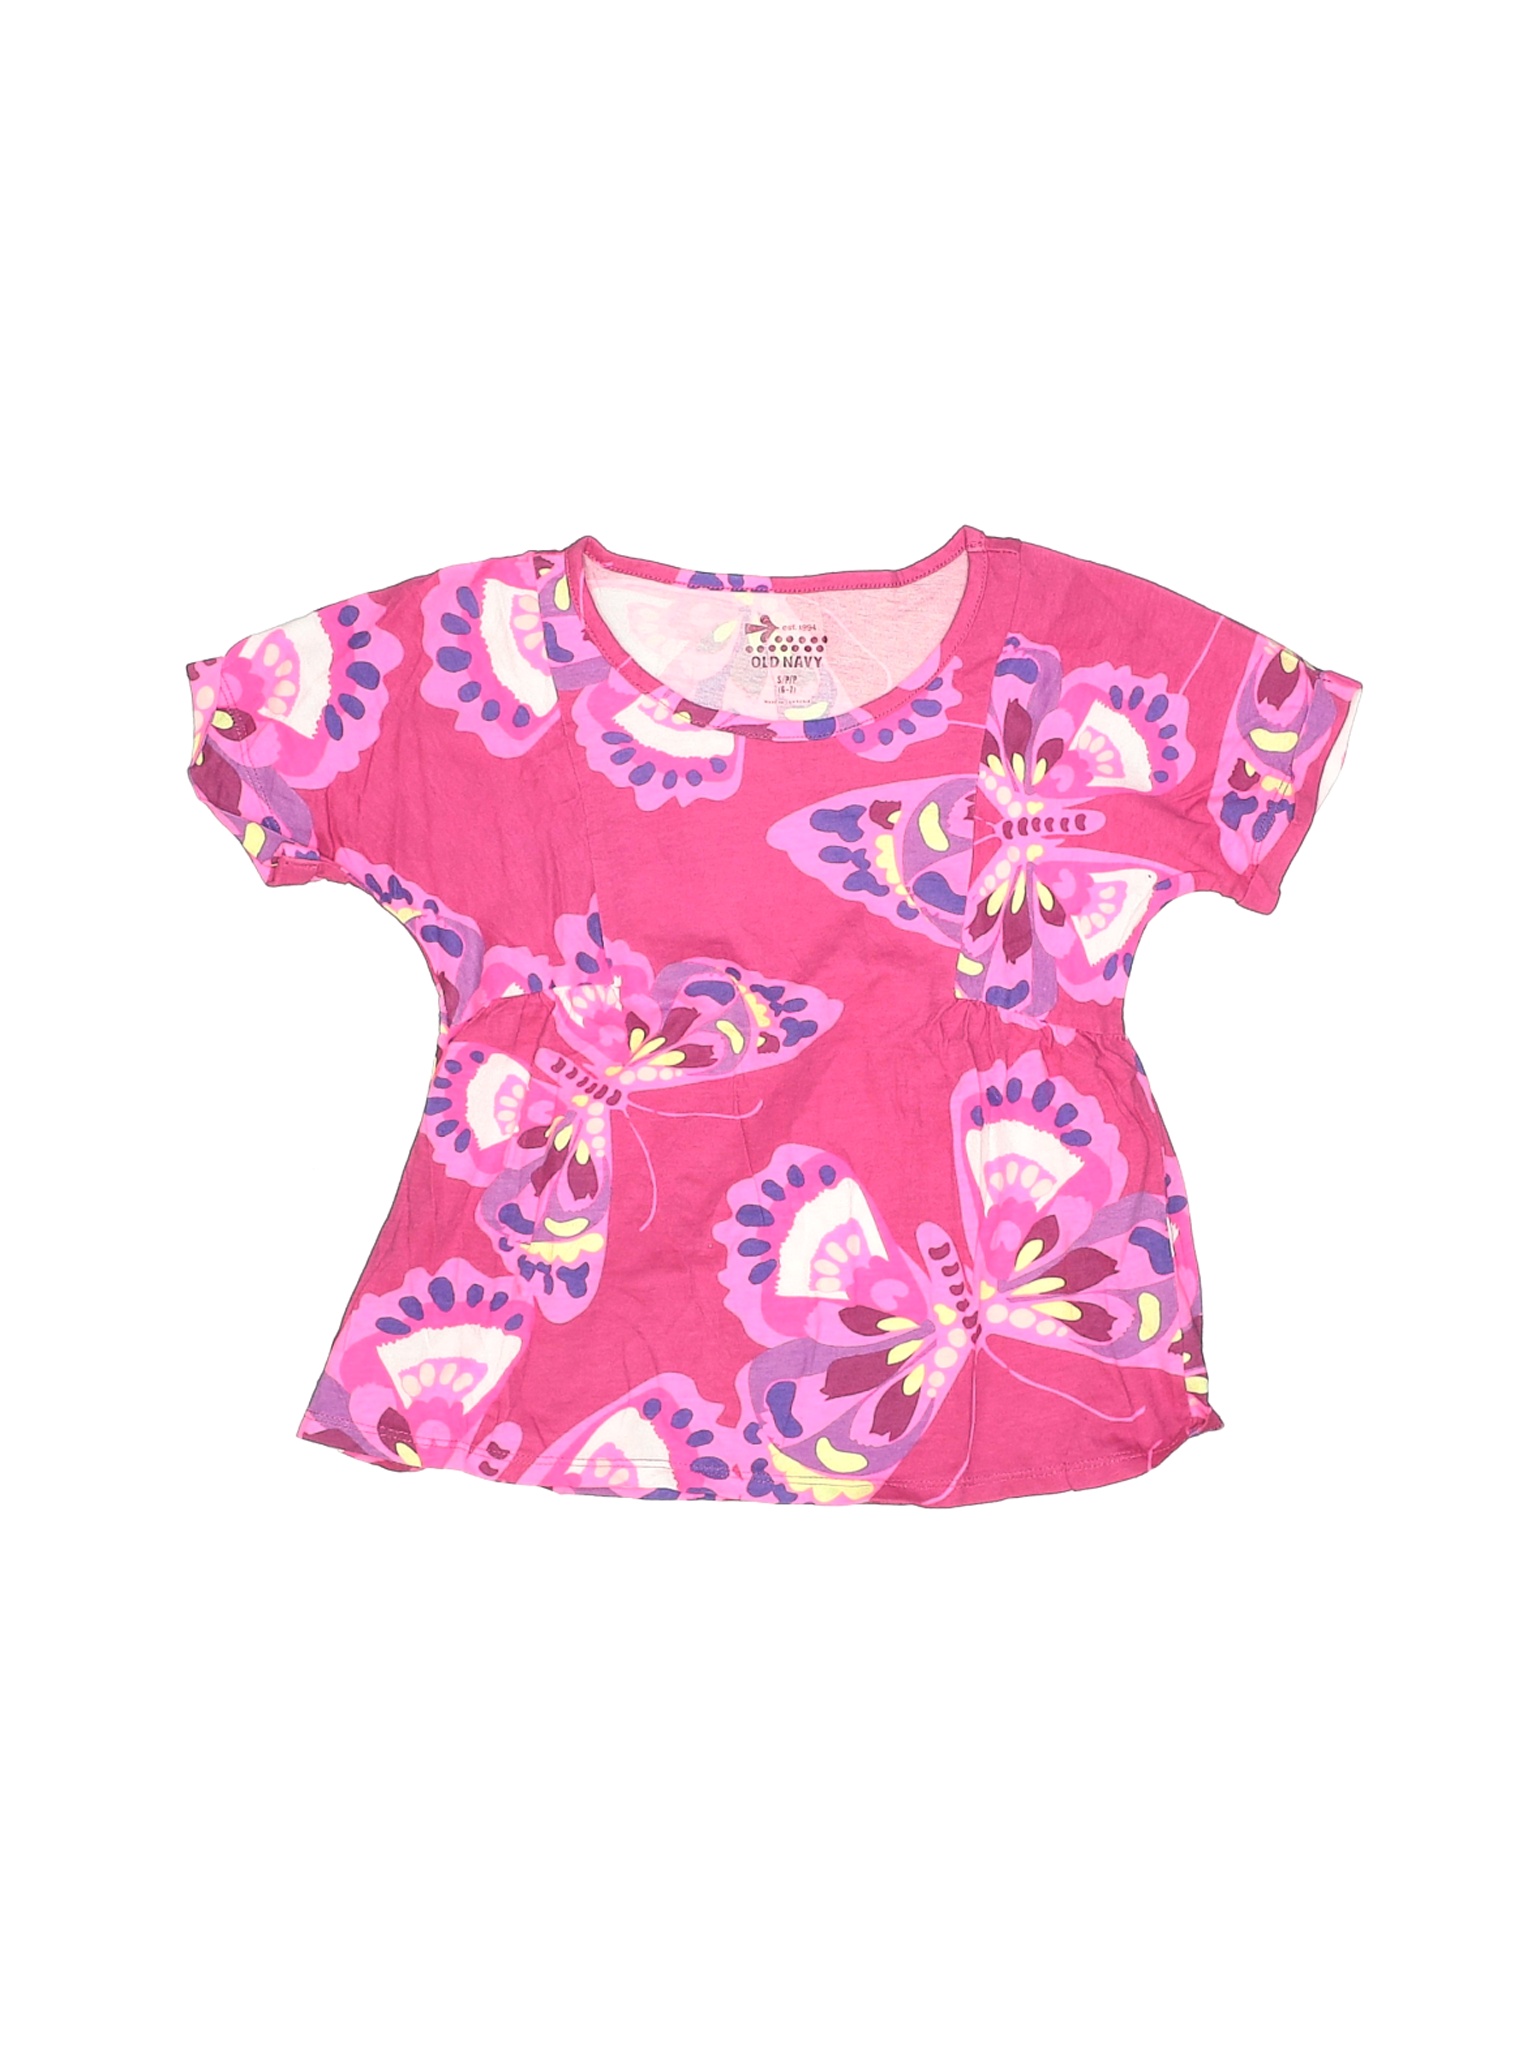 Old Navy Girls Pink Short Sleeve Top 6 | eBay